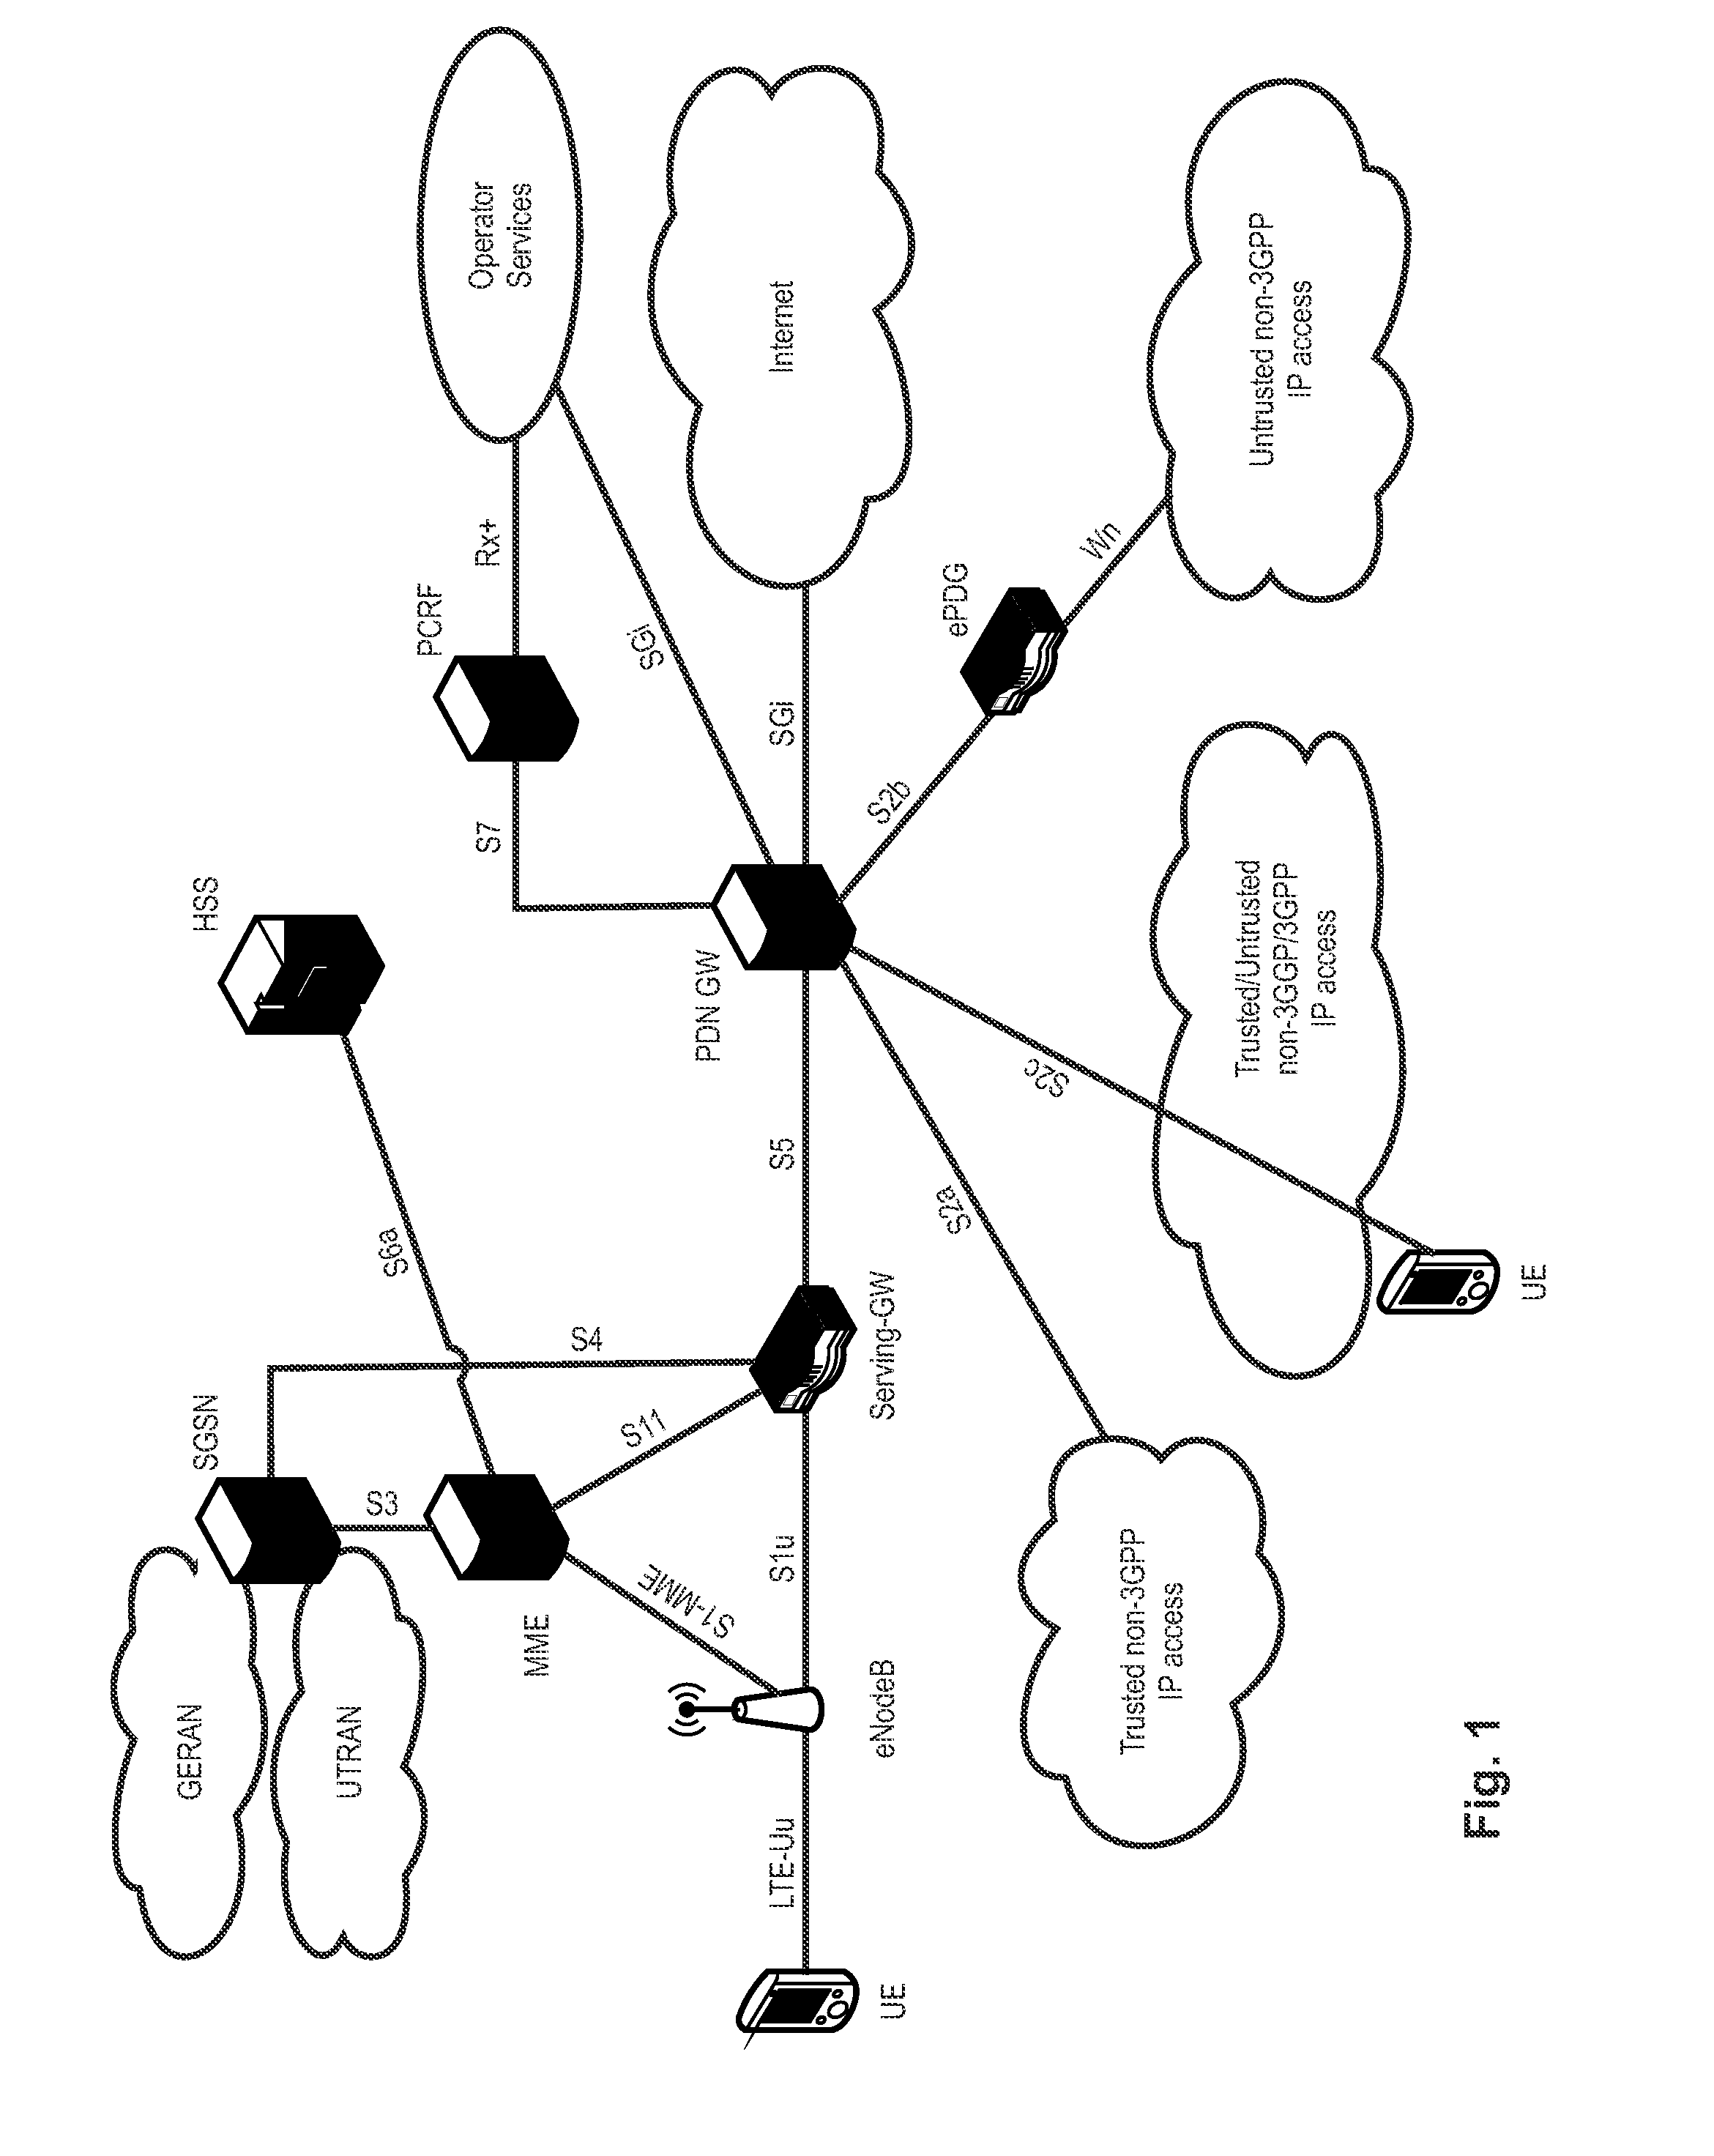 TDD uplink/downlink re-configuration mechanism